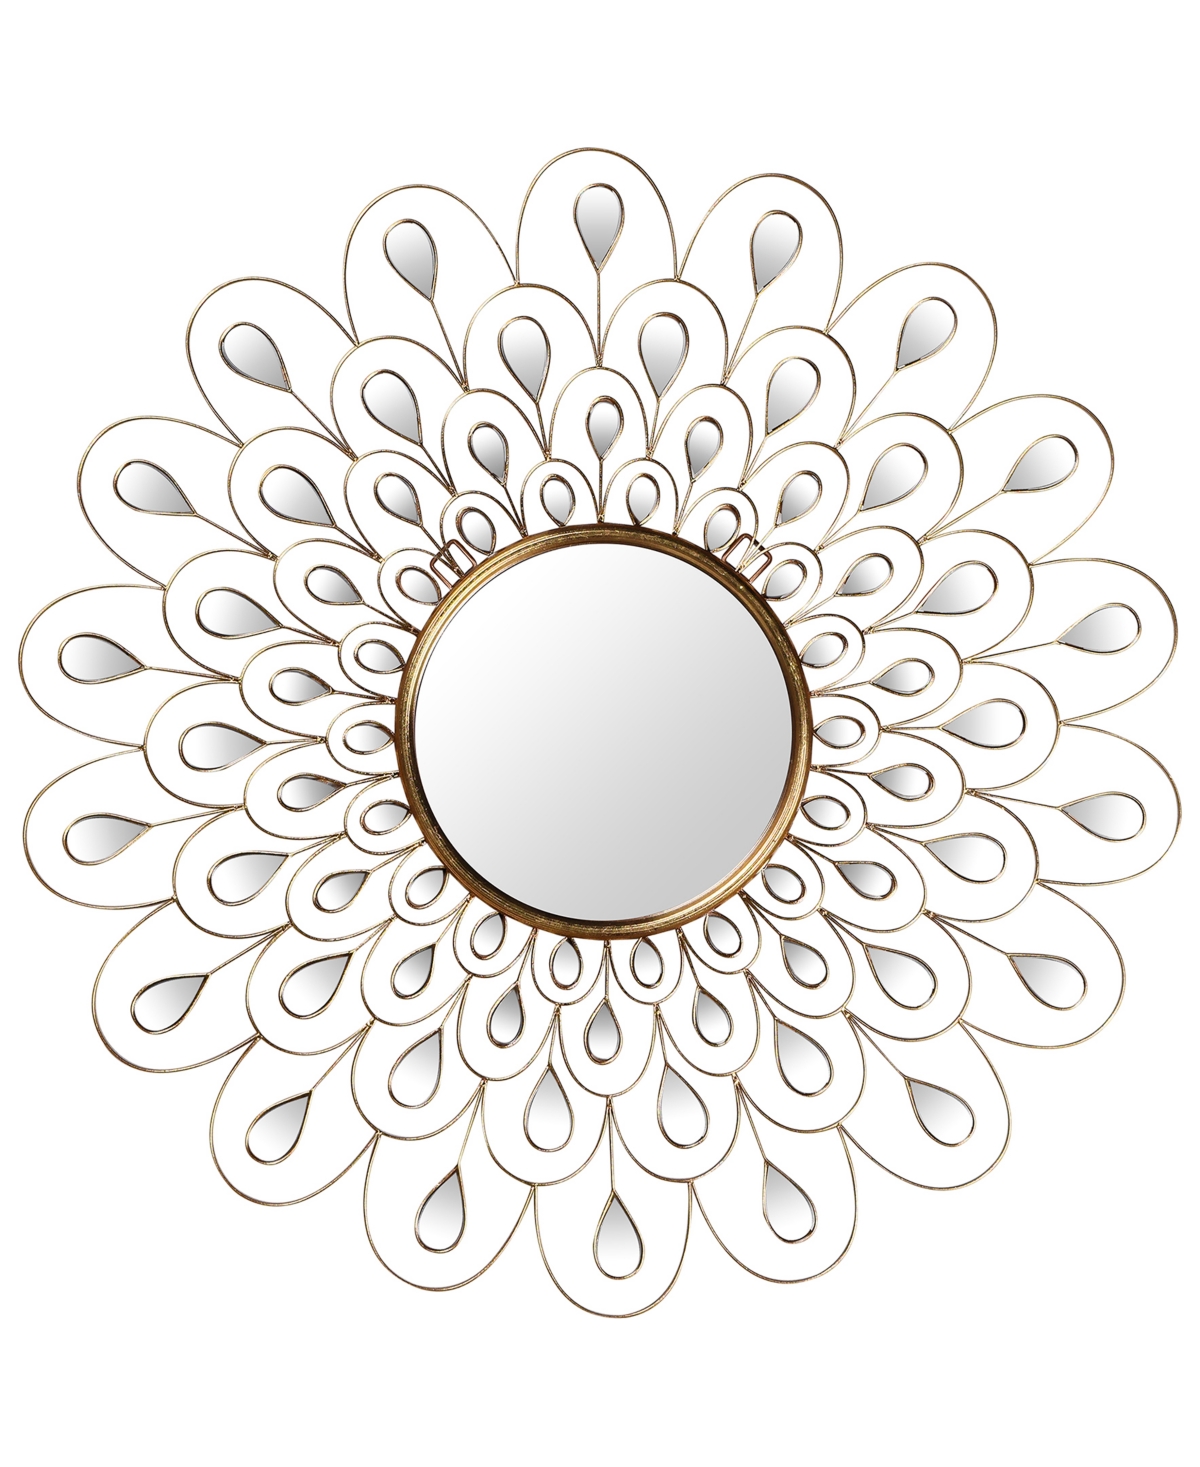 'Flower Burst' Bling Round Wall Mirror, 36" x 36" - Gold-Tone